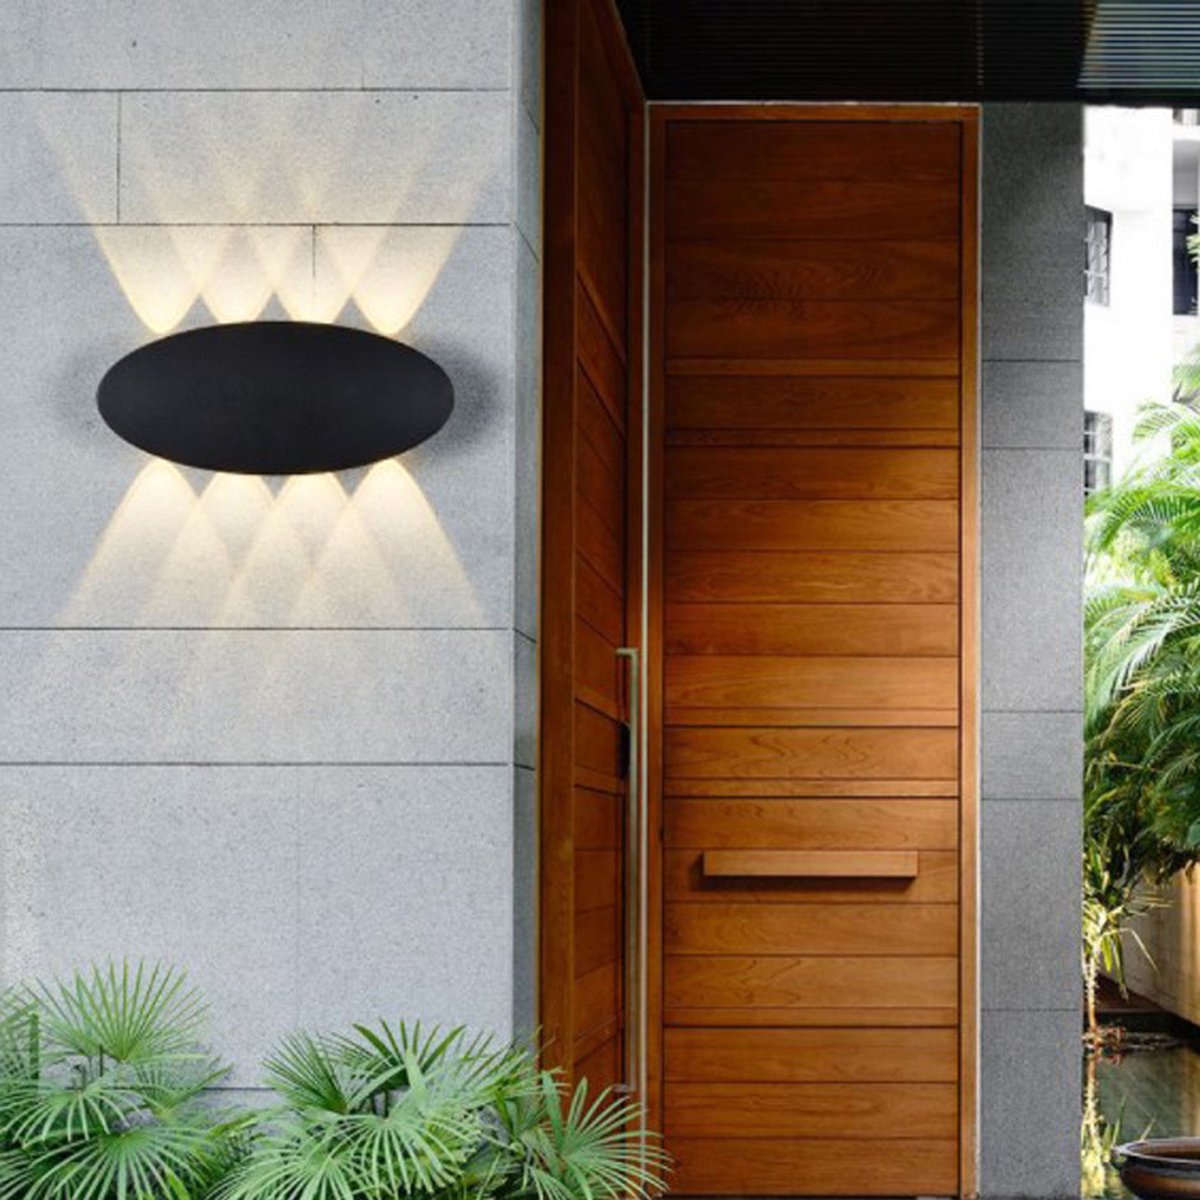 Ovale up & down light LED outdoor solar wandlamp